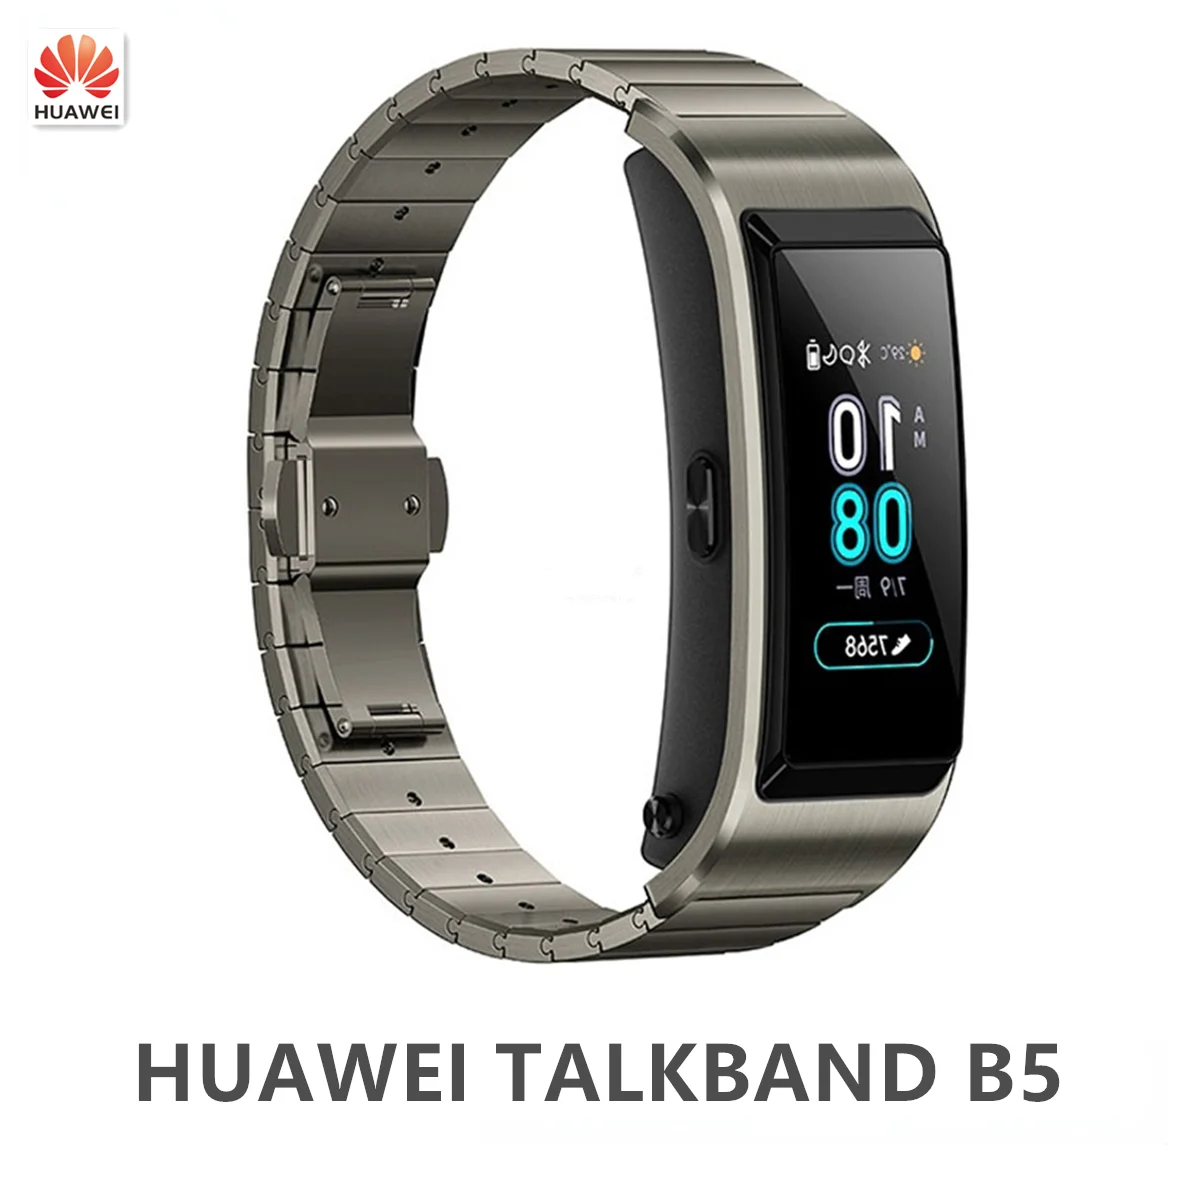 

Huawei Talkband B5 Global Smart Wristbands Bluetooth Headset Sports Bracelet Fitness Tracker Heart Rate Monitoring